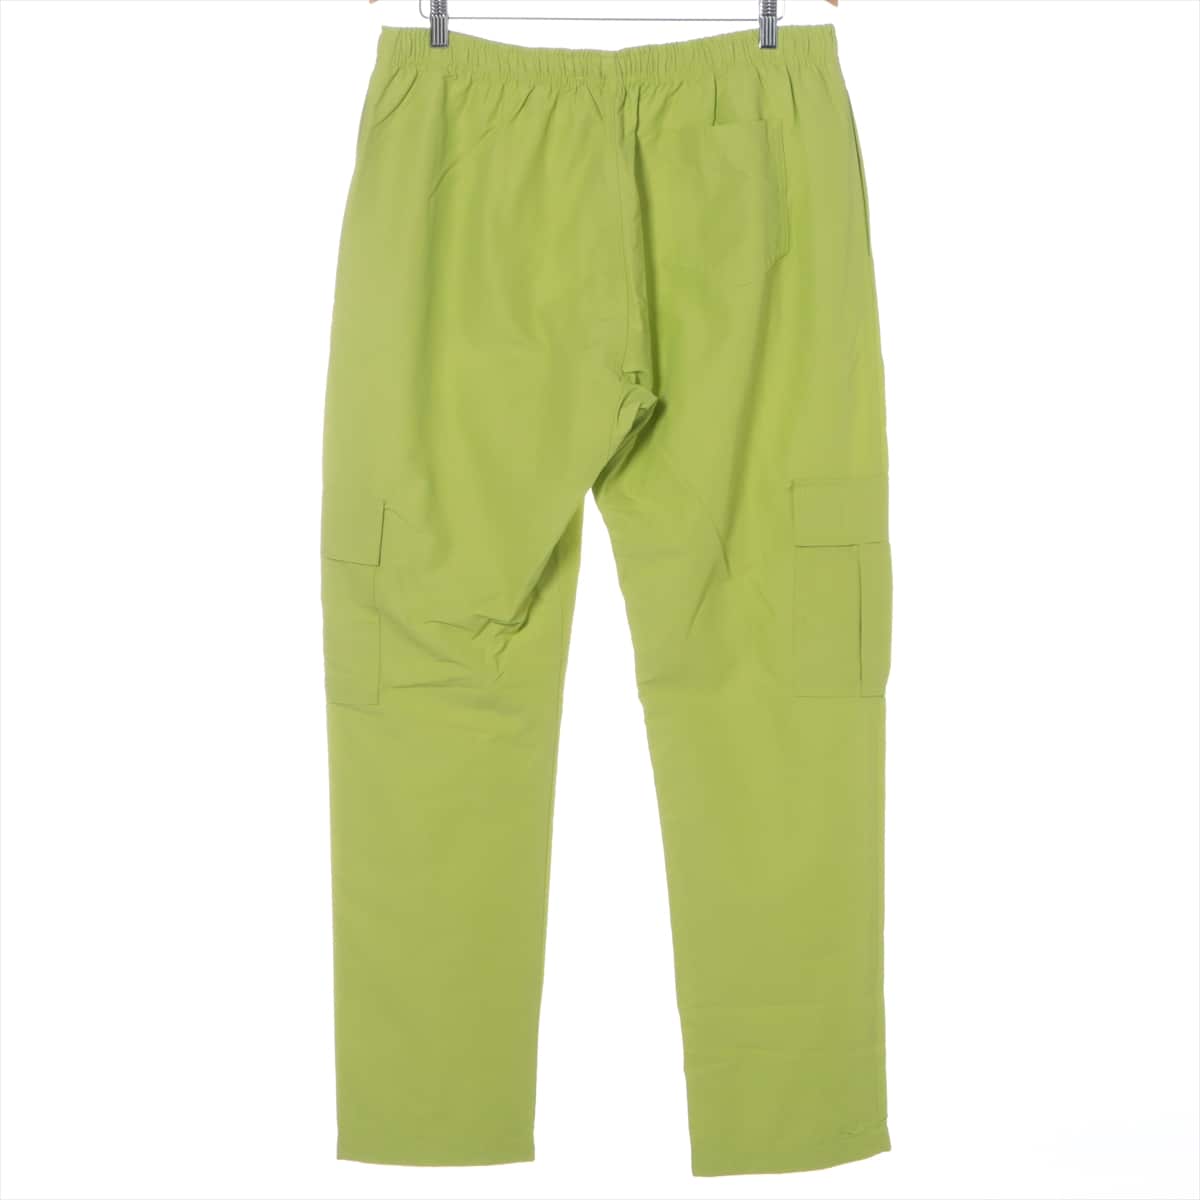 Siberian Hills Cotton & nylon Cargo pants XL Men's Yellow